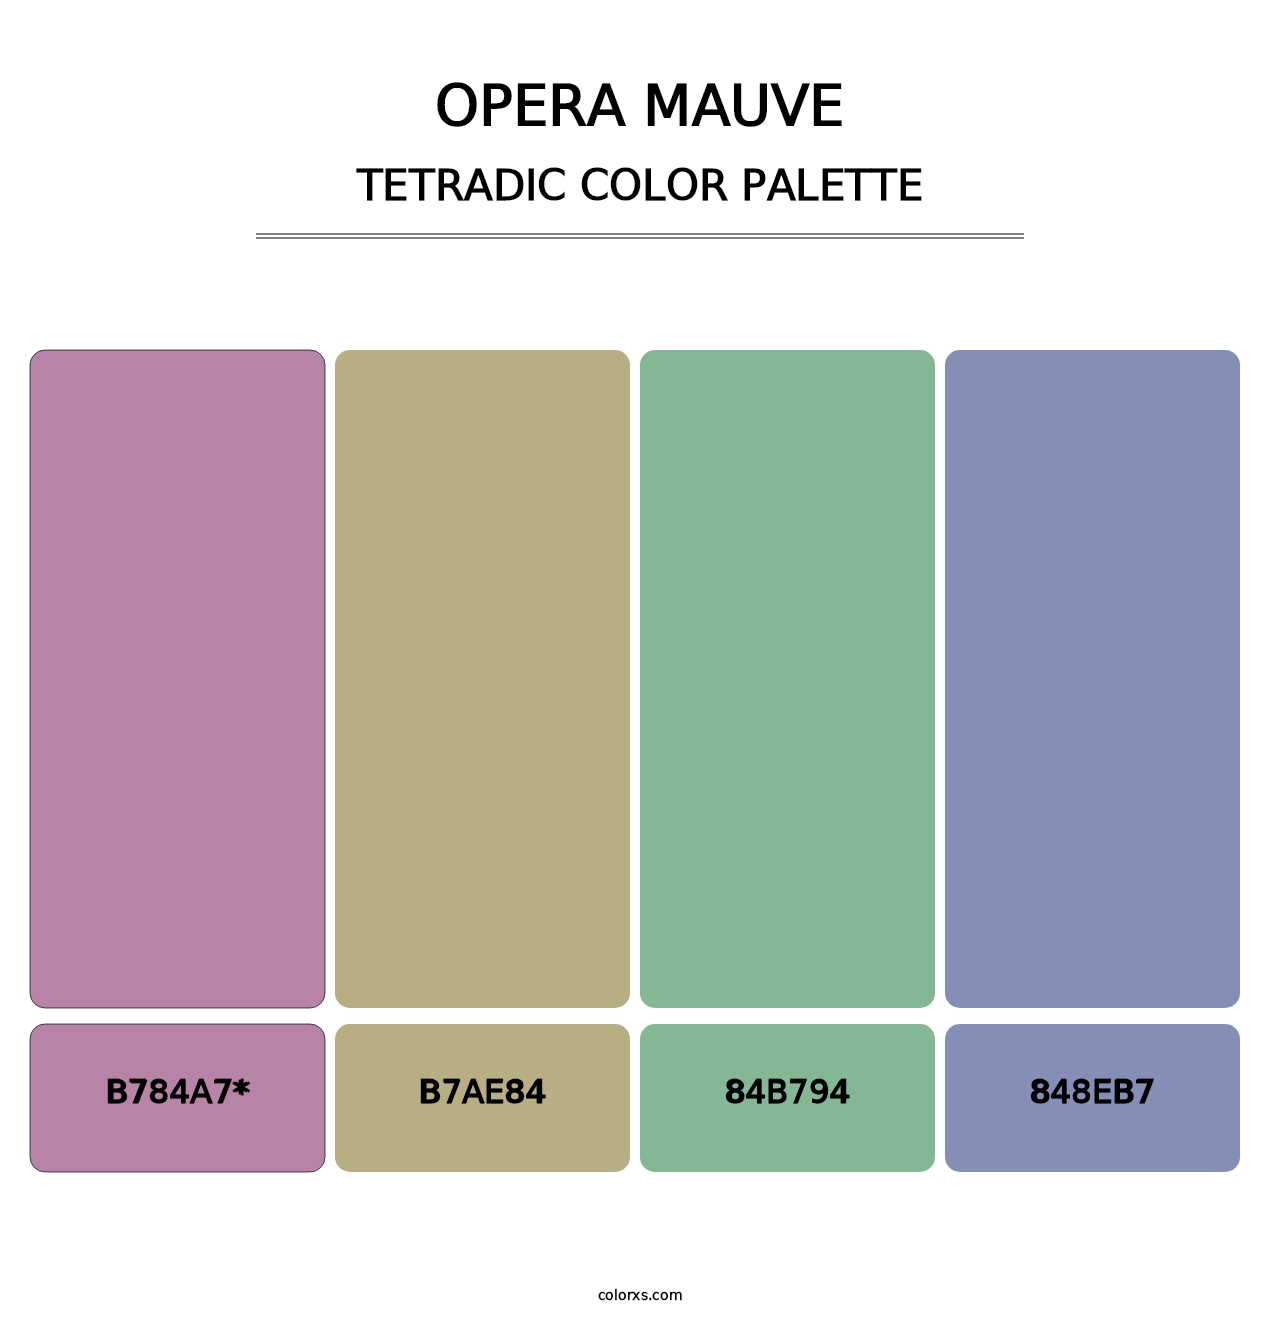 Opera Mauve - Tetradic Color Palette